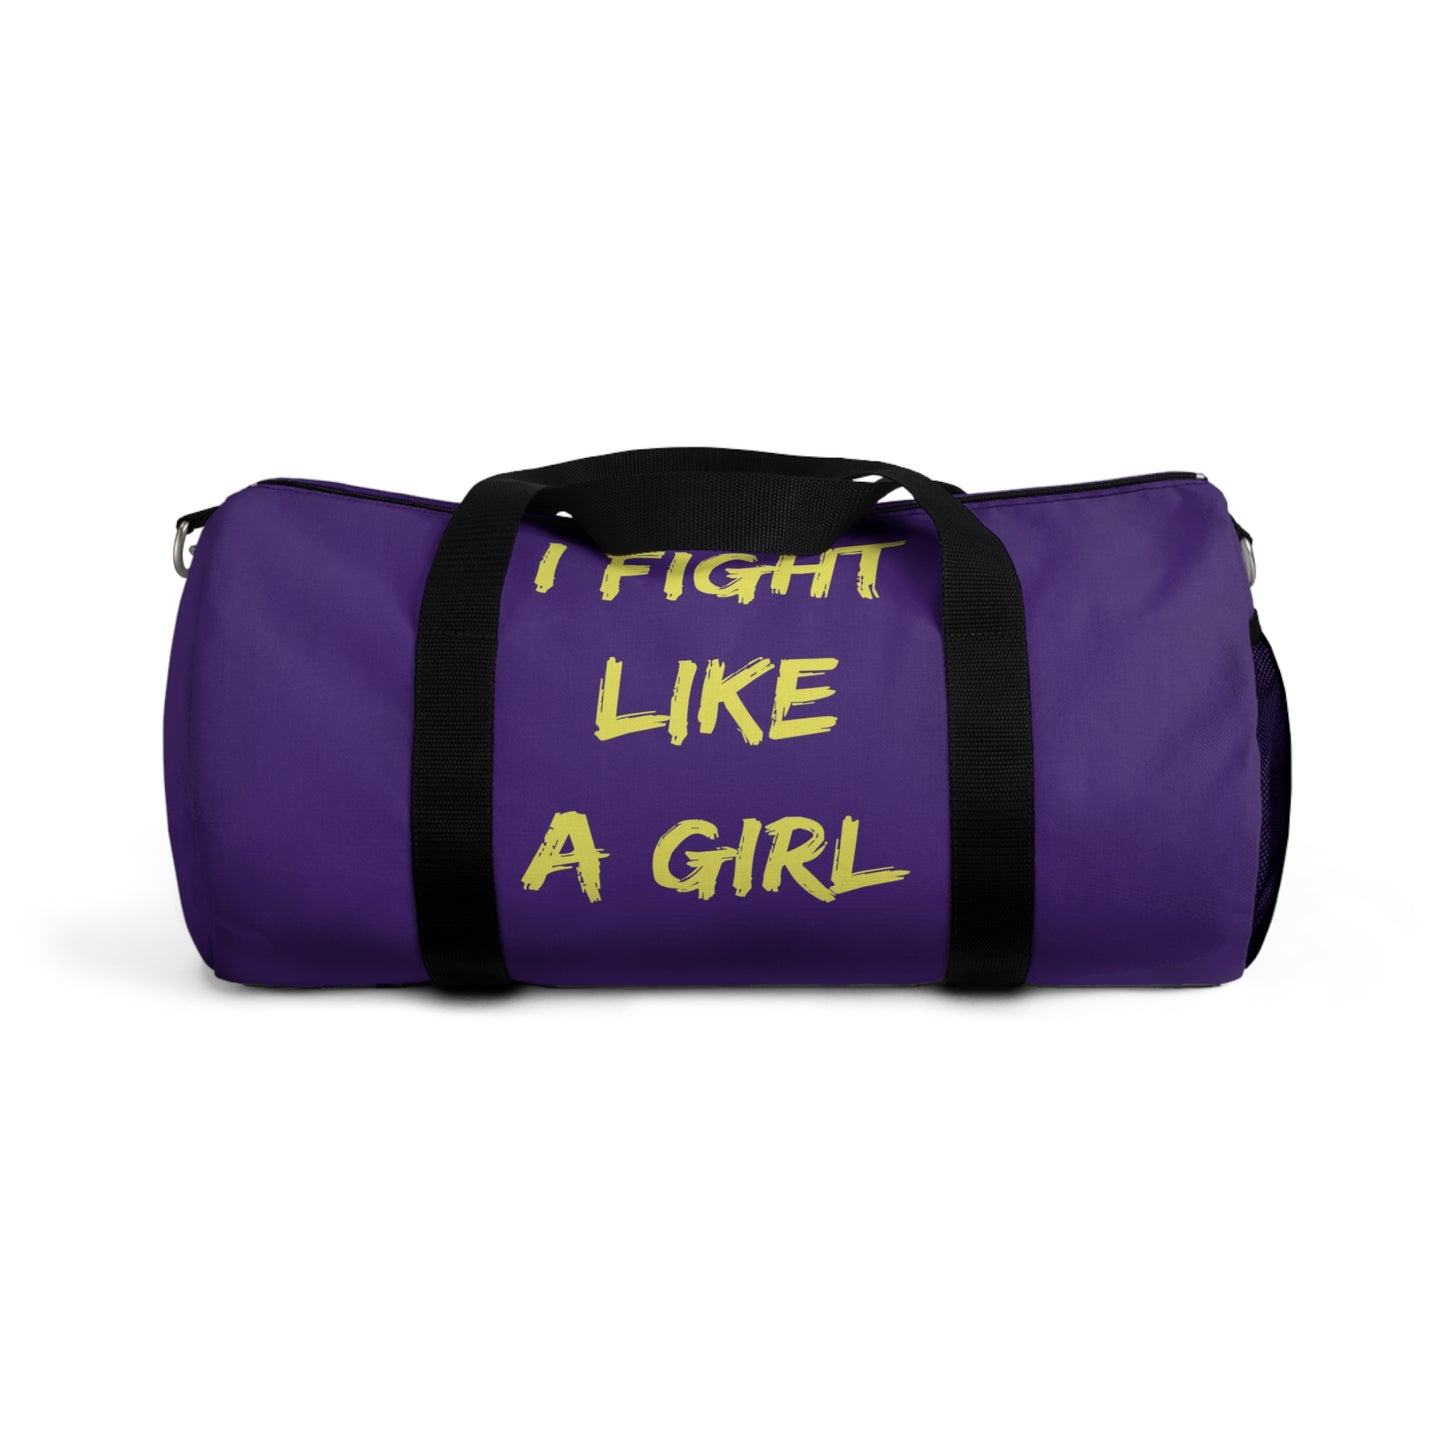 I FIGHT LIKE A GIRL Duffel Bag - Purple